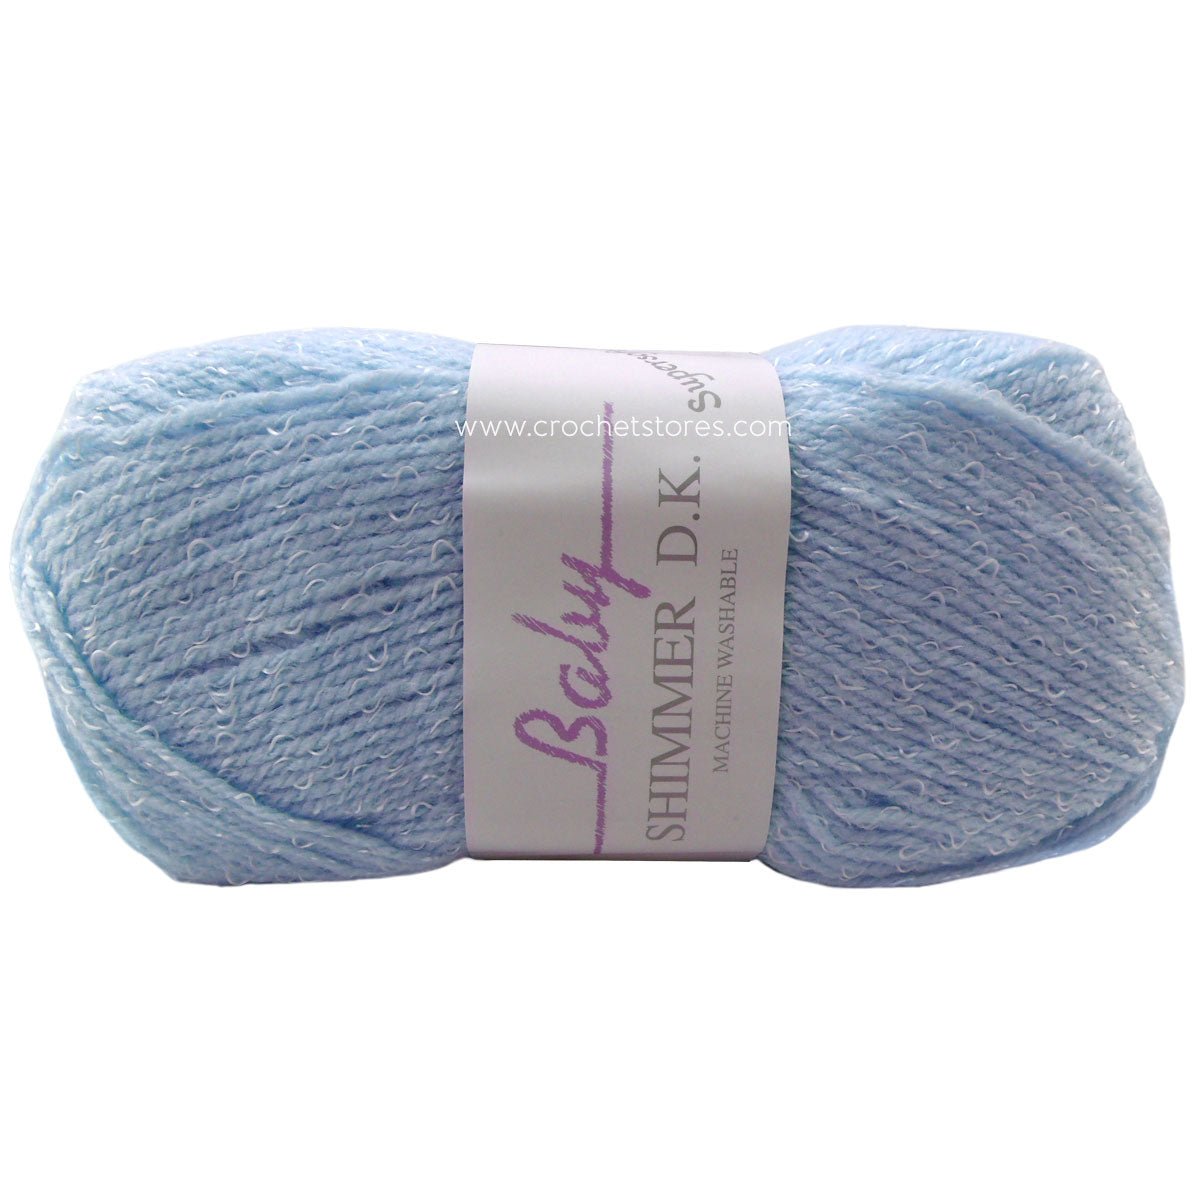 BABY SHIMMER DK - CrochetstoresBS55060019090541